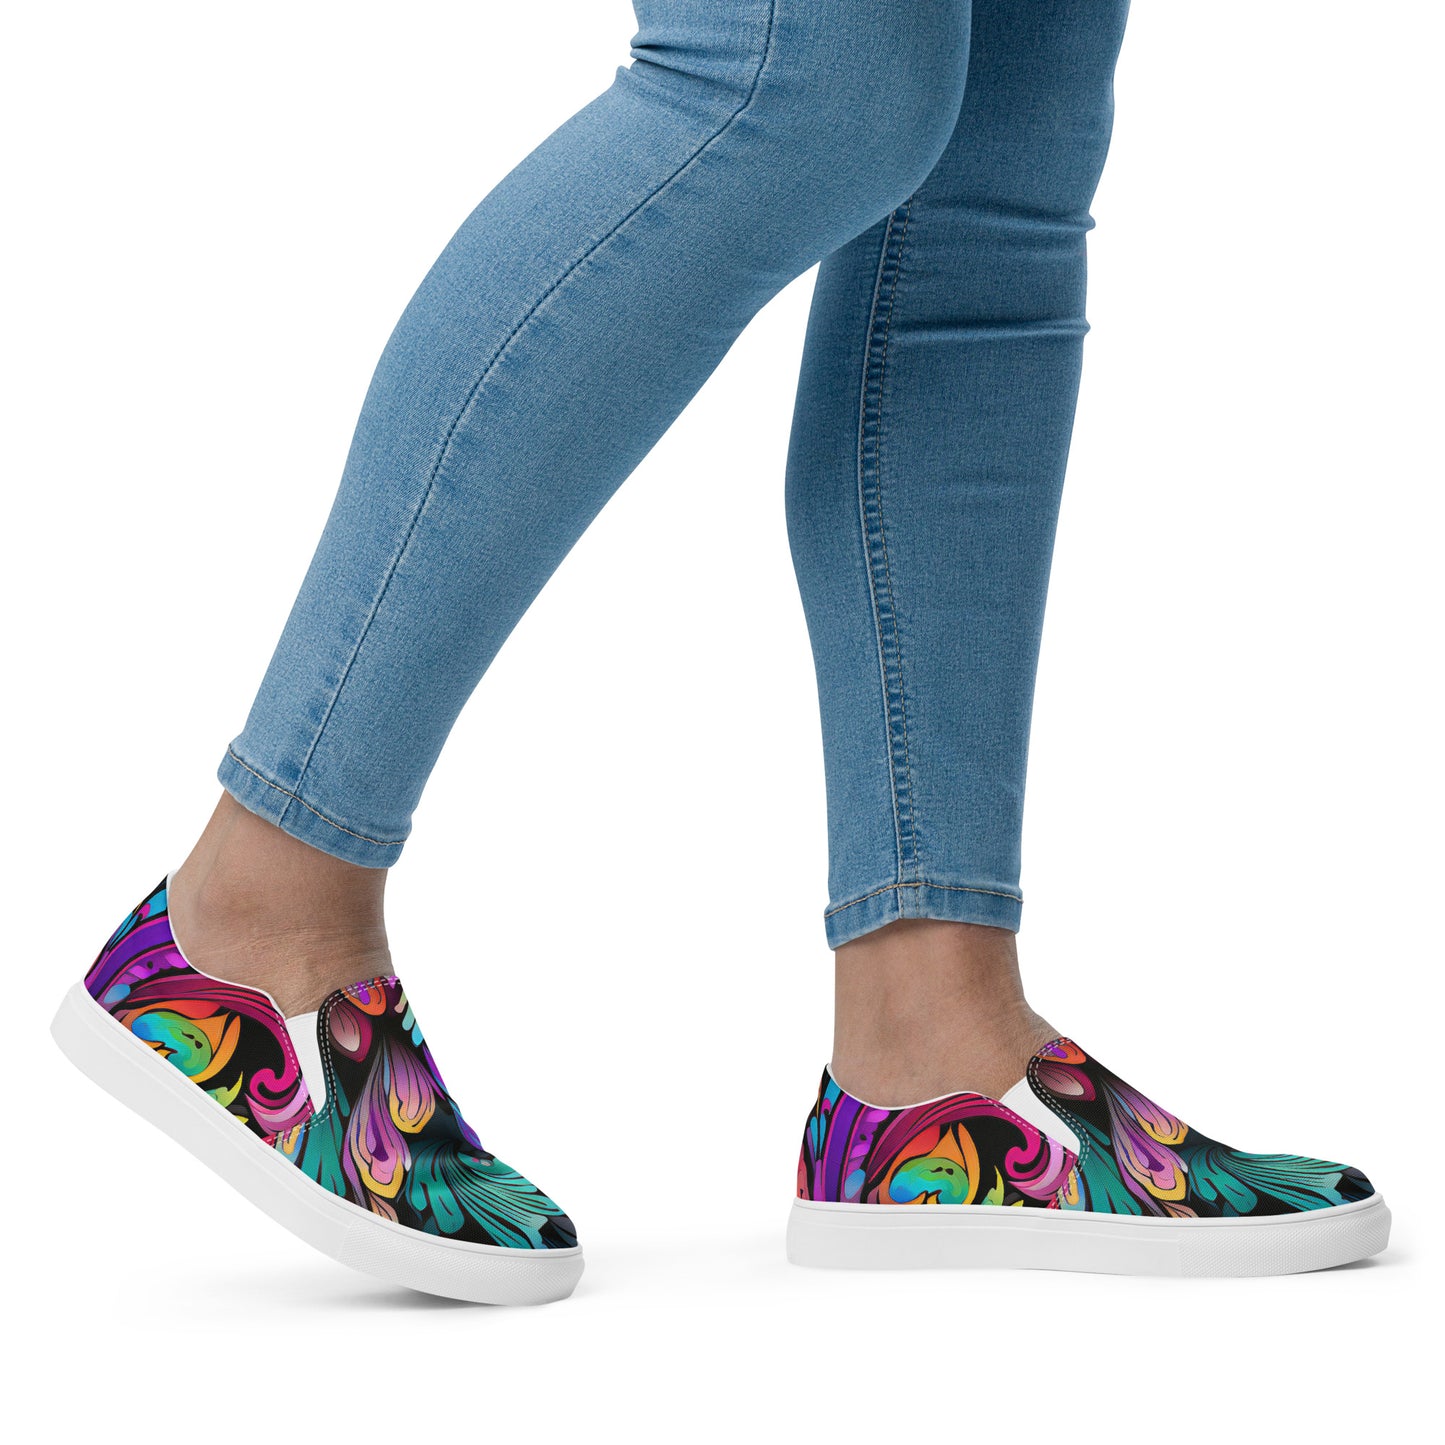 Boho Slip On Shoes For Women Bright Bohemian Sneakers